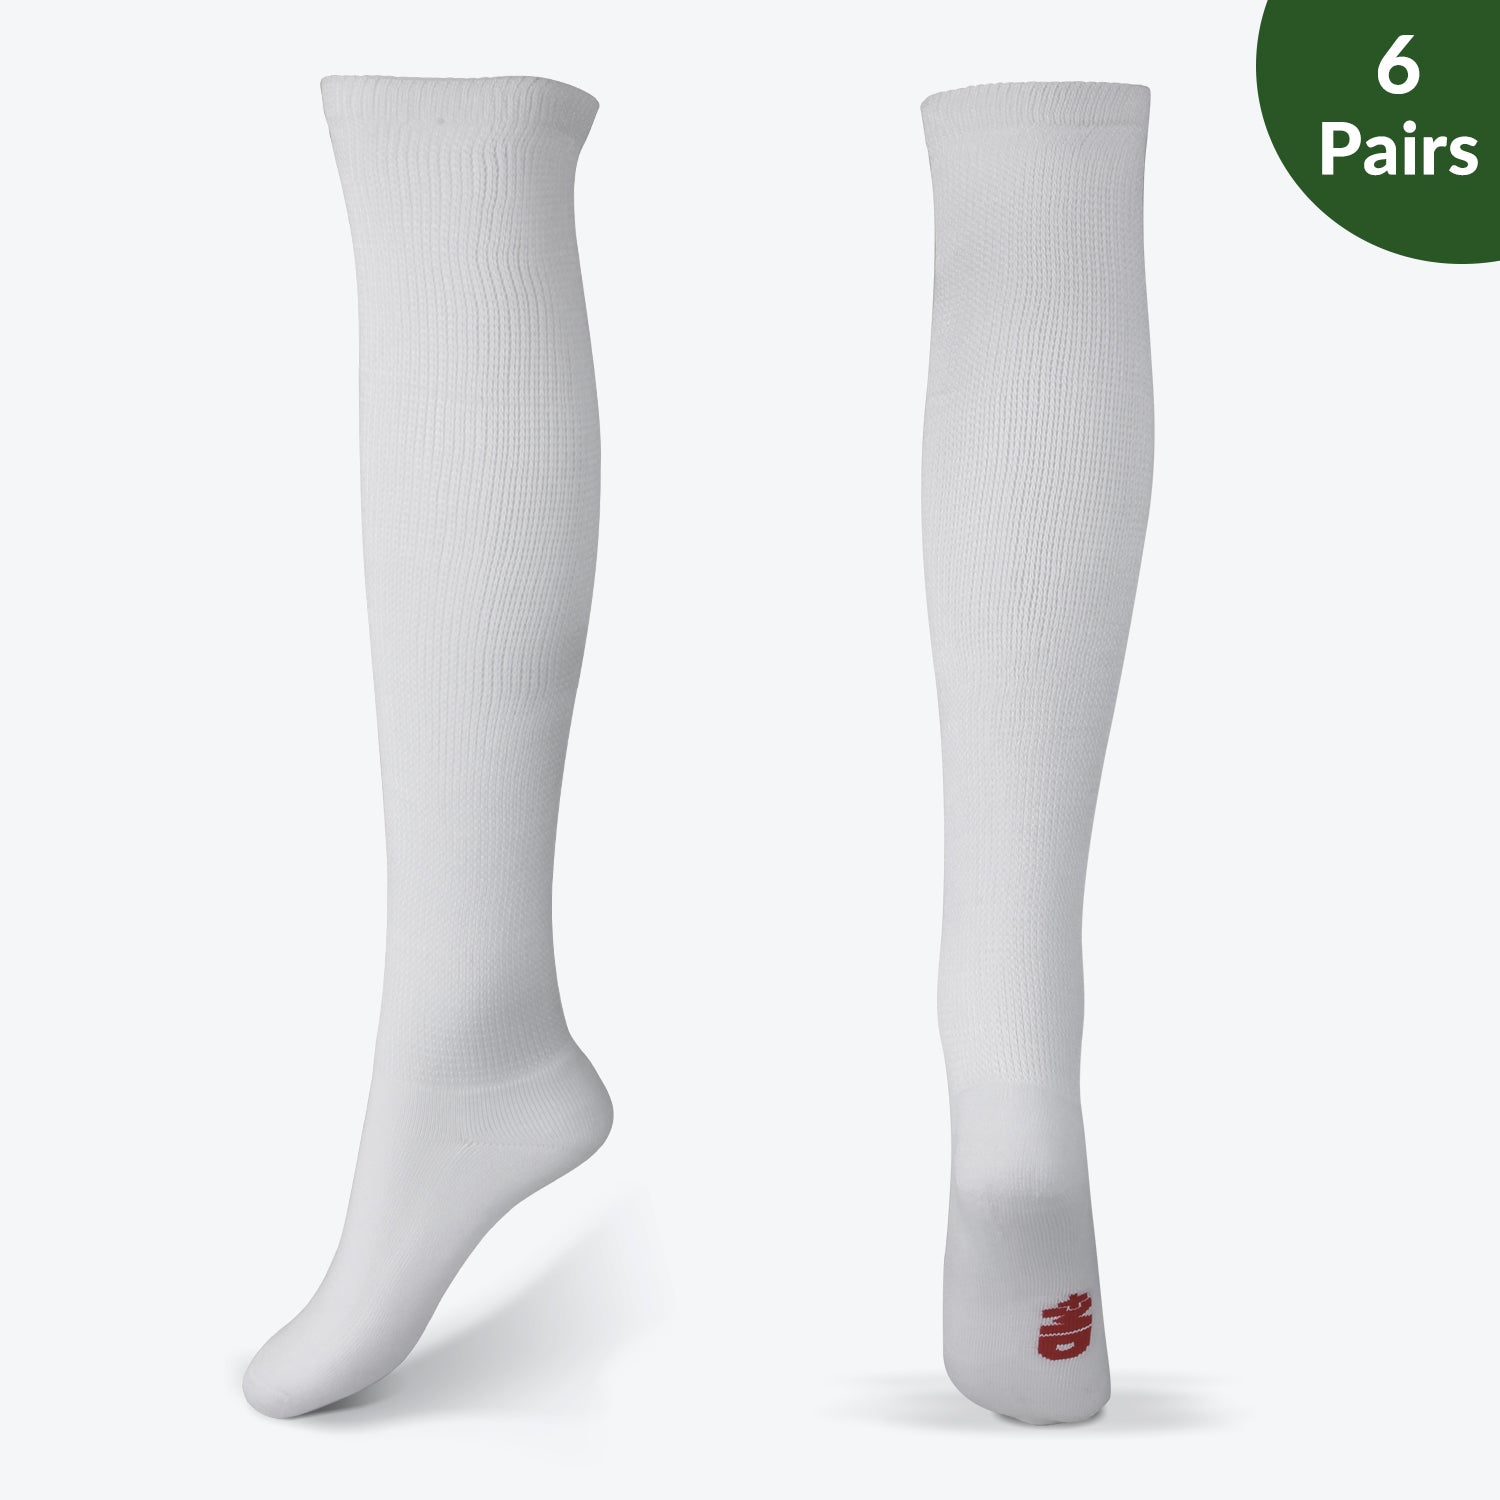 Extra wide non-binding Bamboo Knee high socks, seamless toe, long circulatory design with Warm cushion sole, 6 pairs